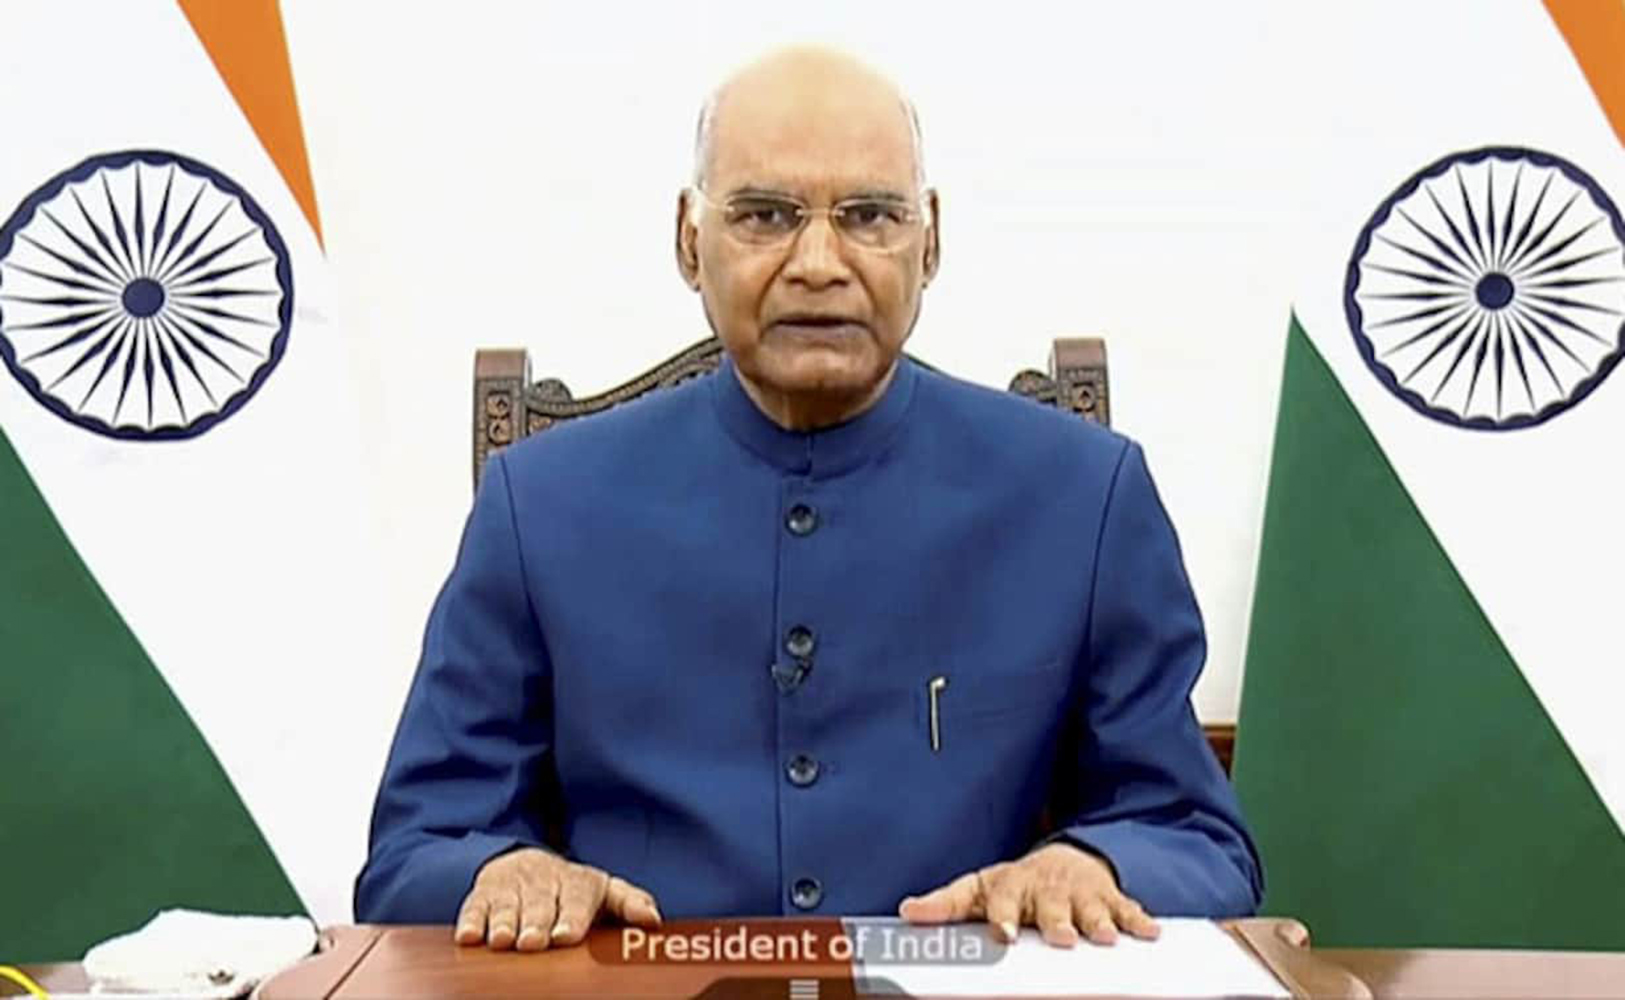 Indian President Kovind presidential term to end